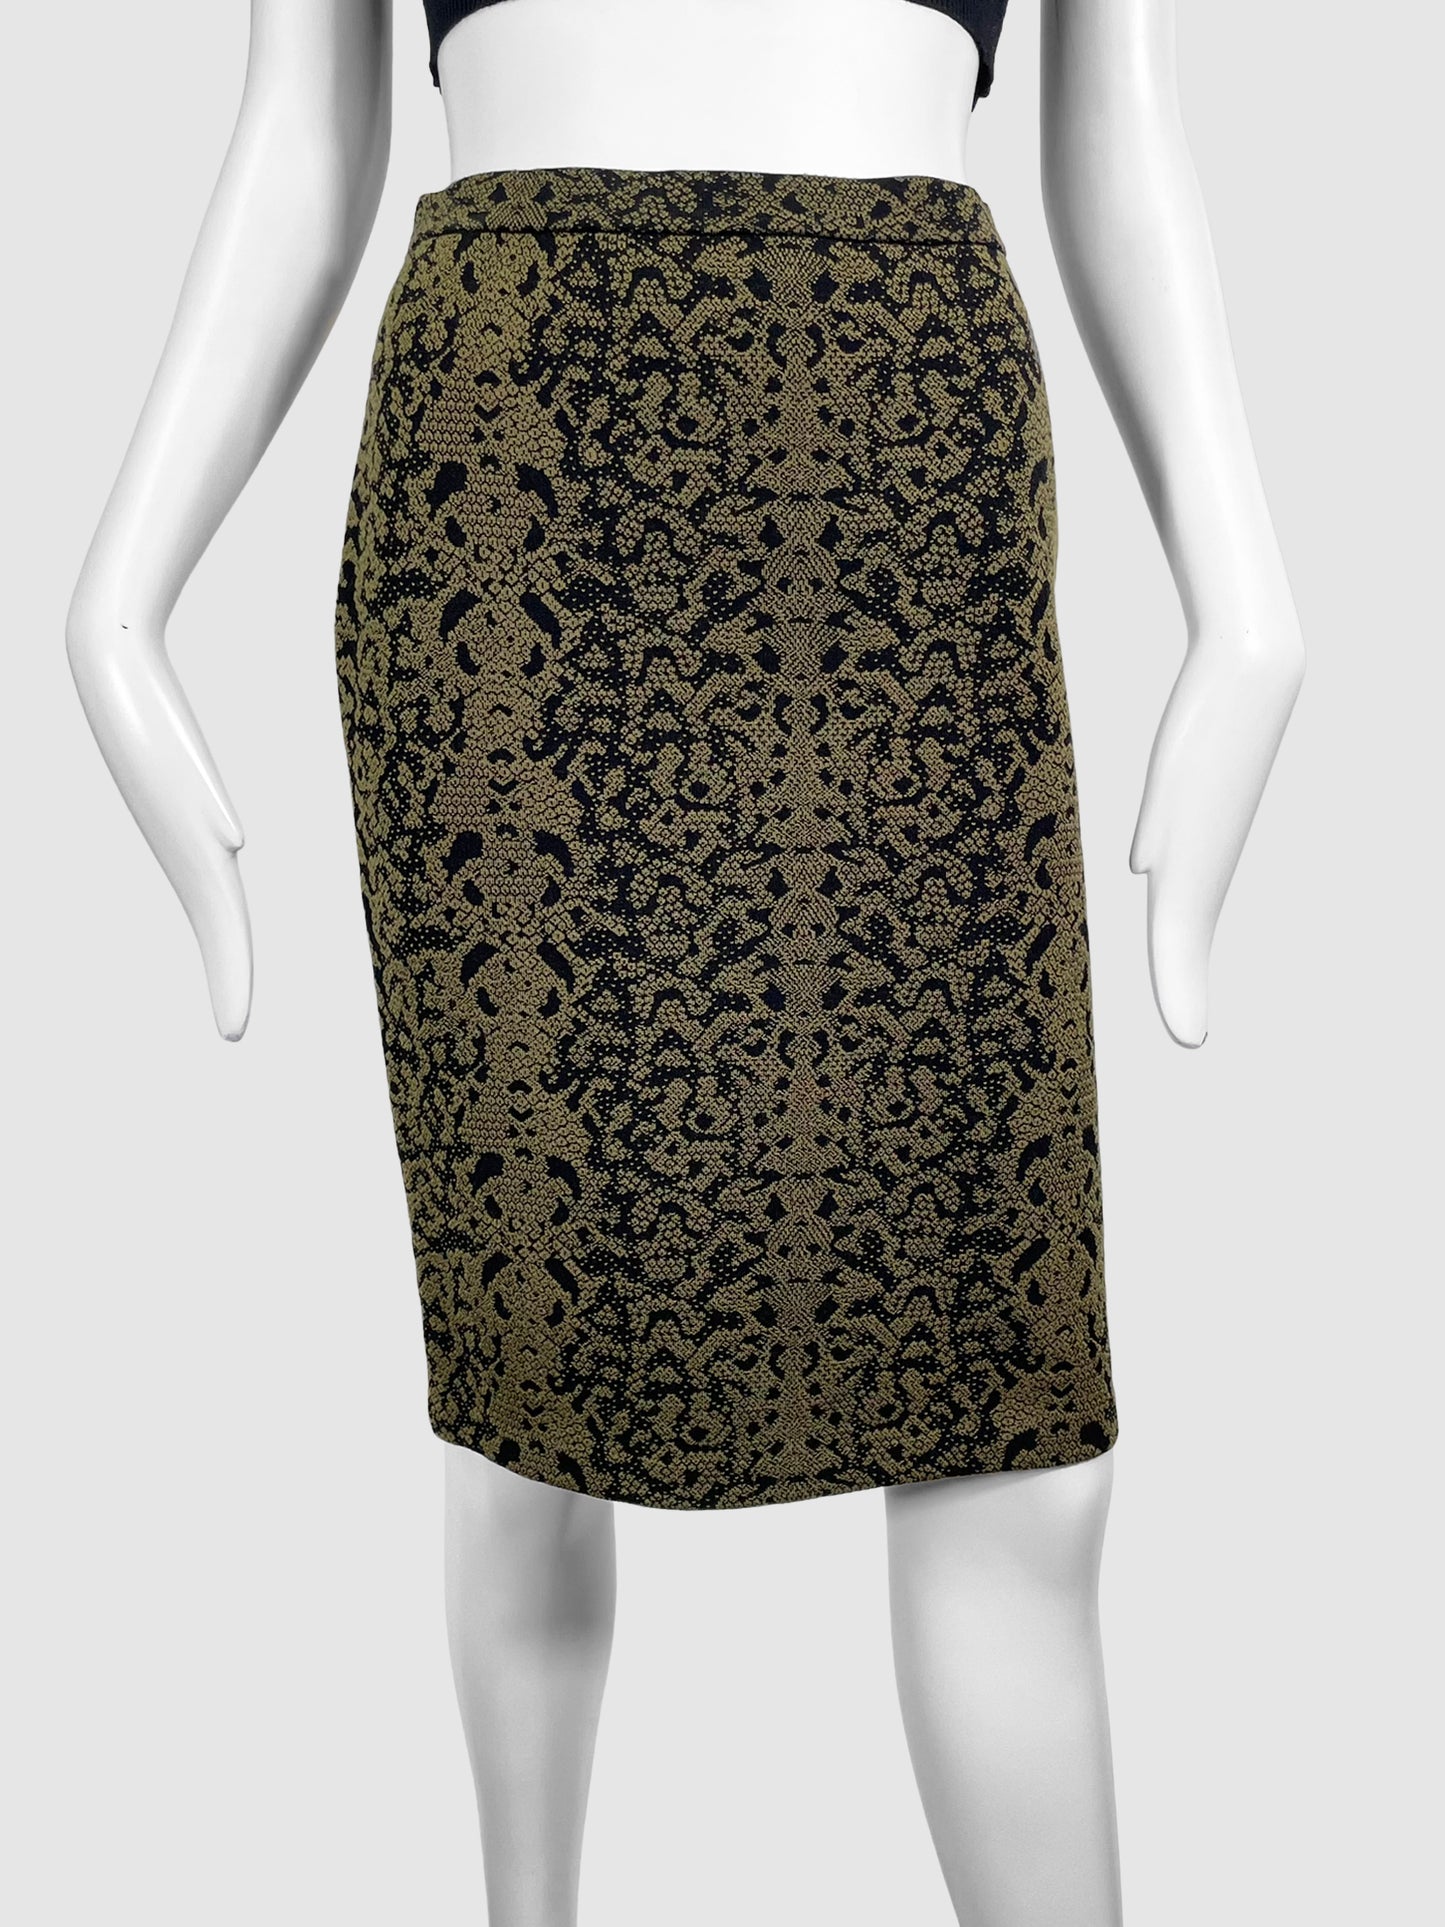 Gucci Printed Pencil Skirt - Size L